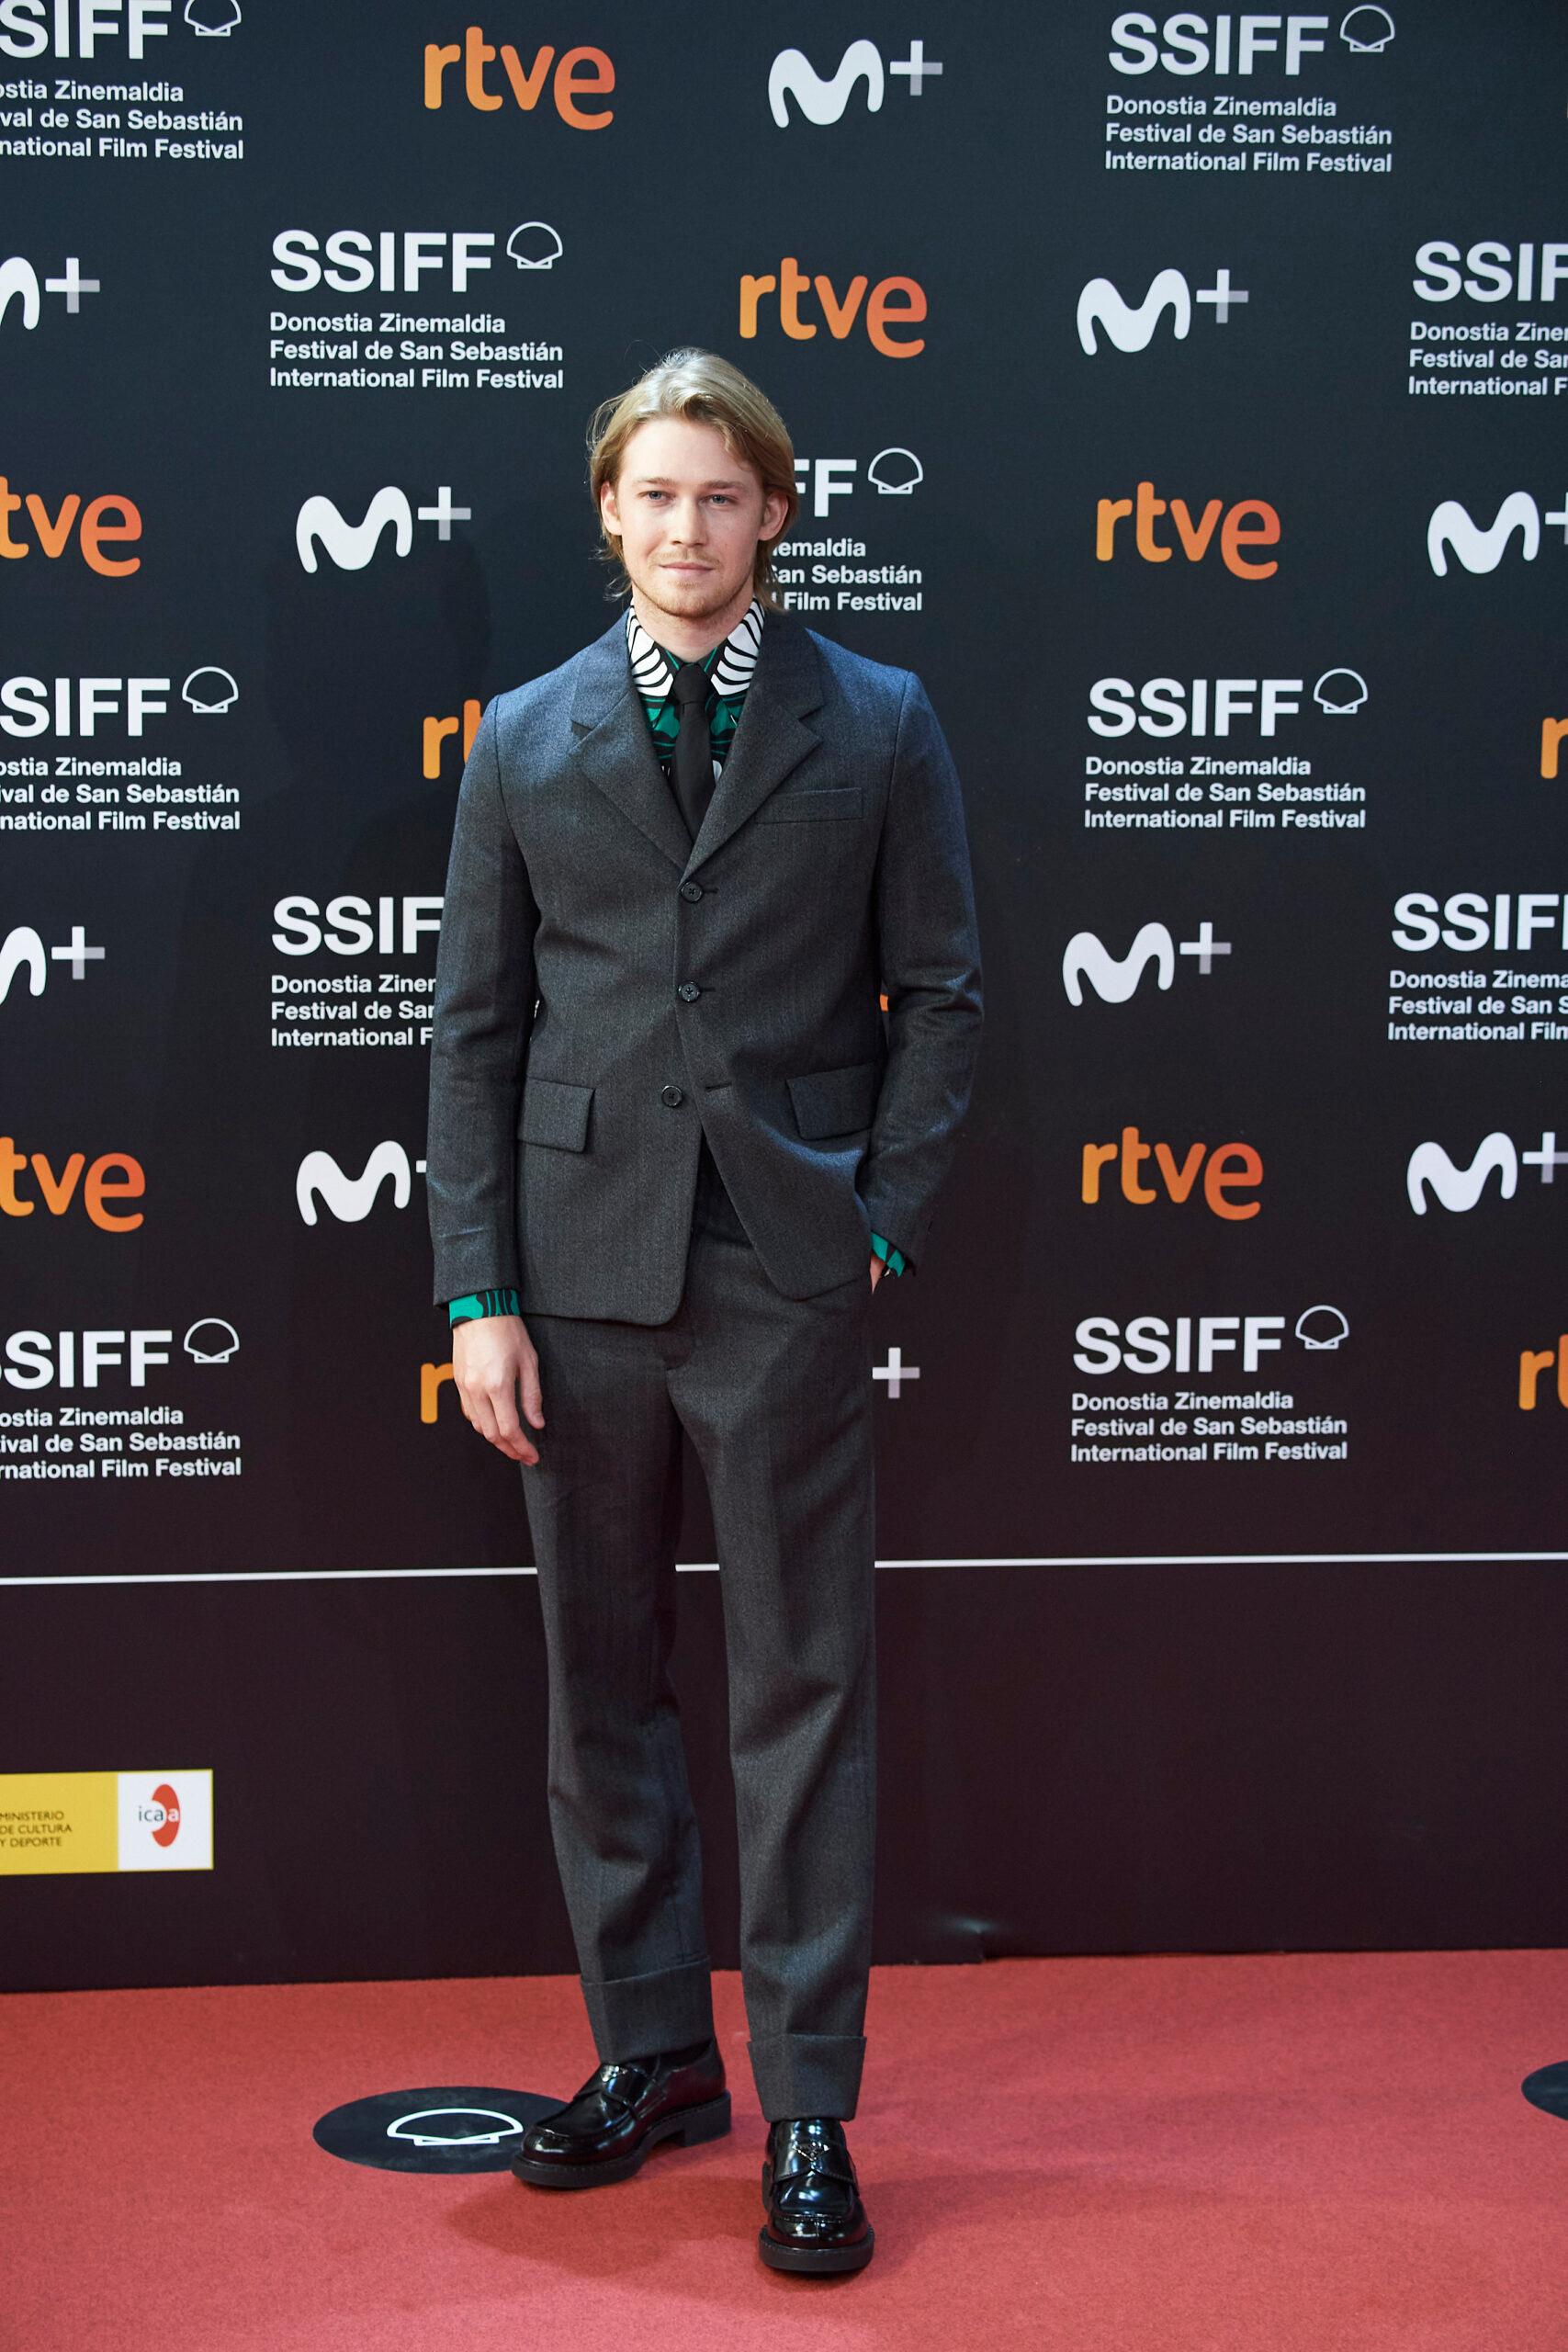 Joe Alwyn at the 68th San Sebastian International Film Festival: Red Carpet Opening Ceremony